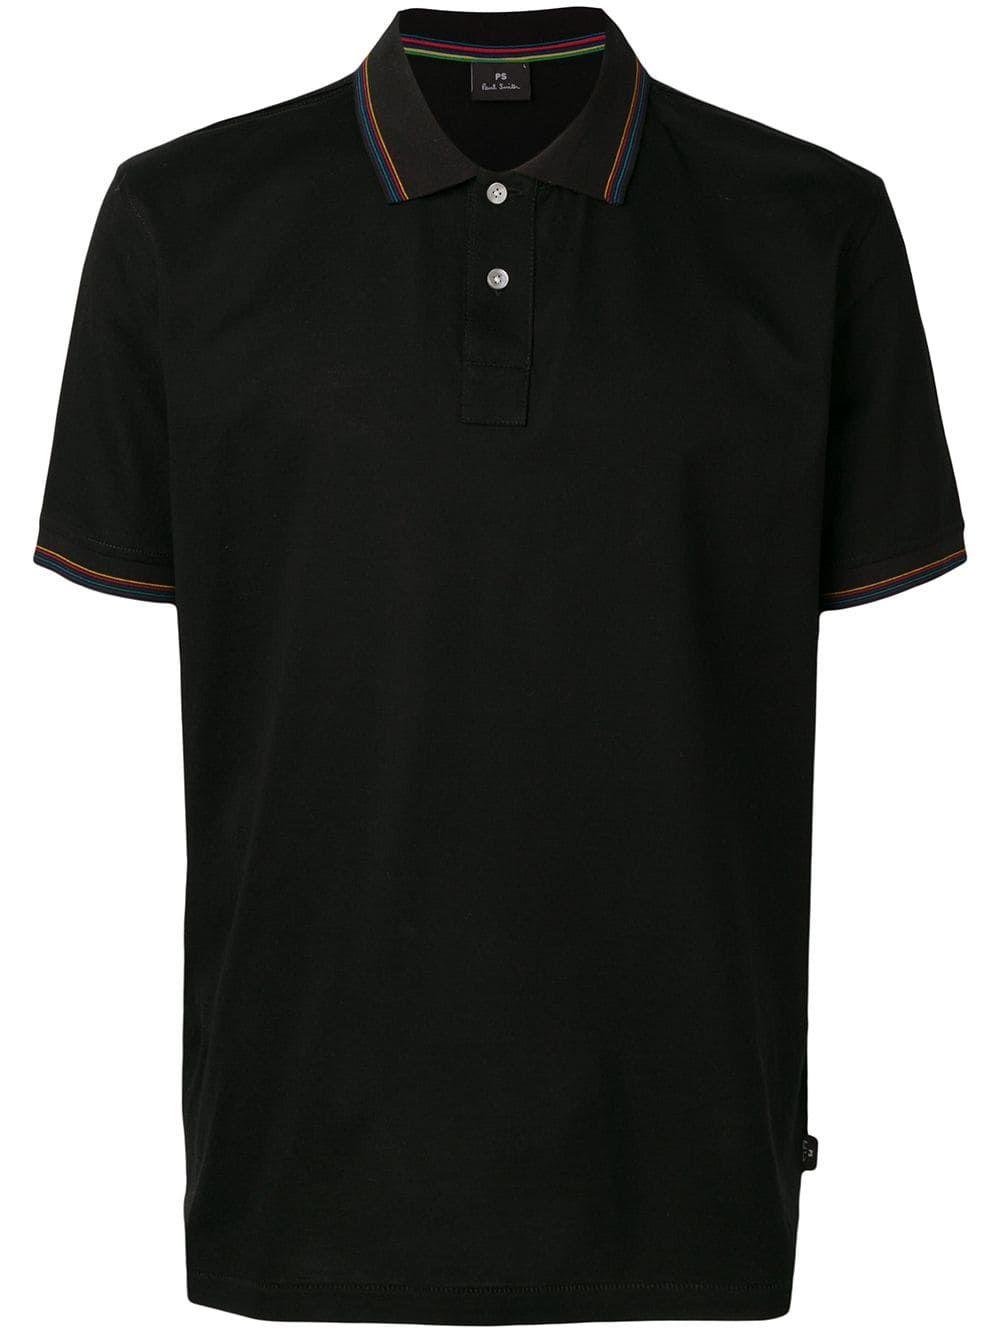 Paul Smith Black Cotton Polo Shirt for Men - Lyst